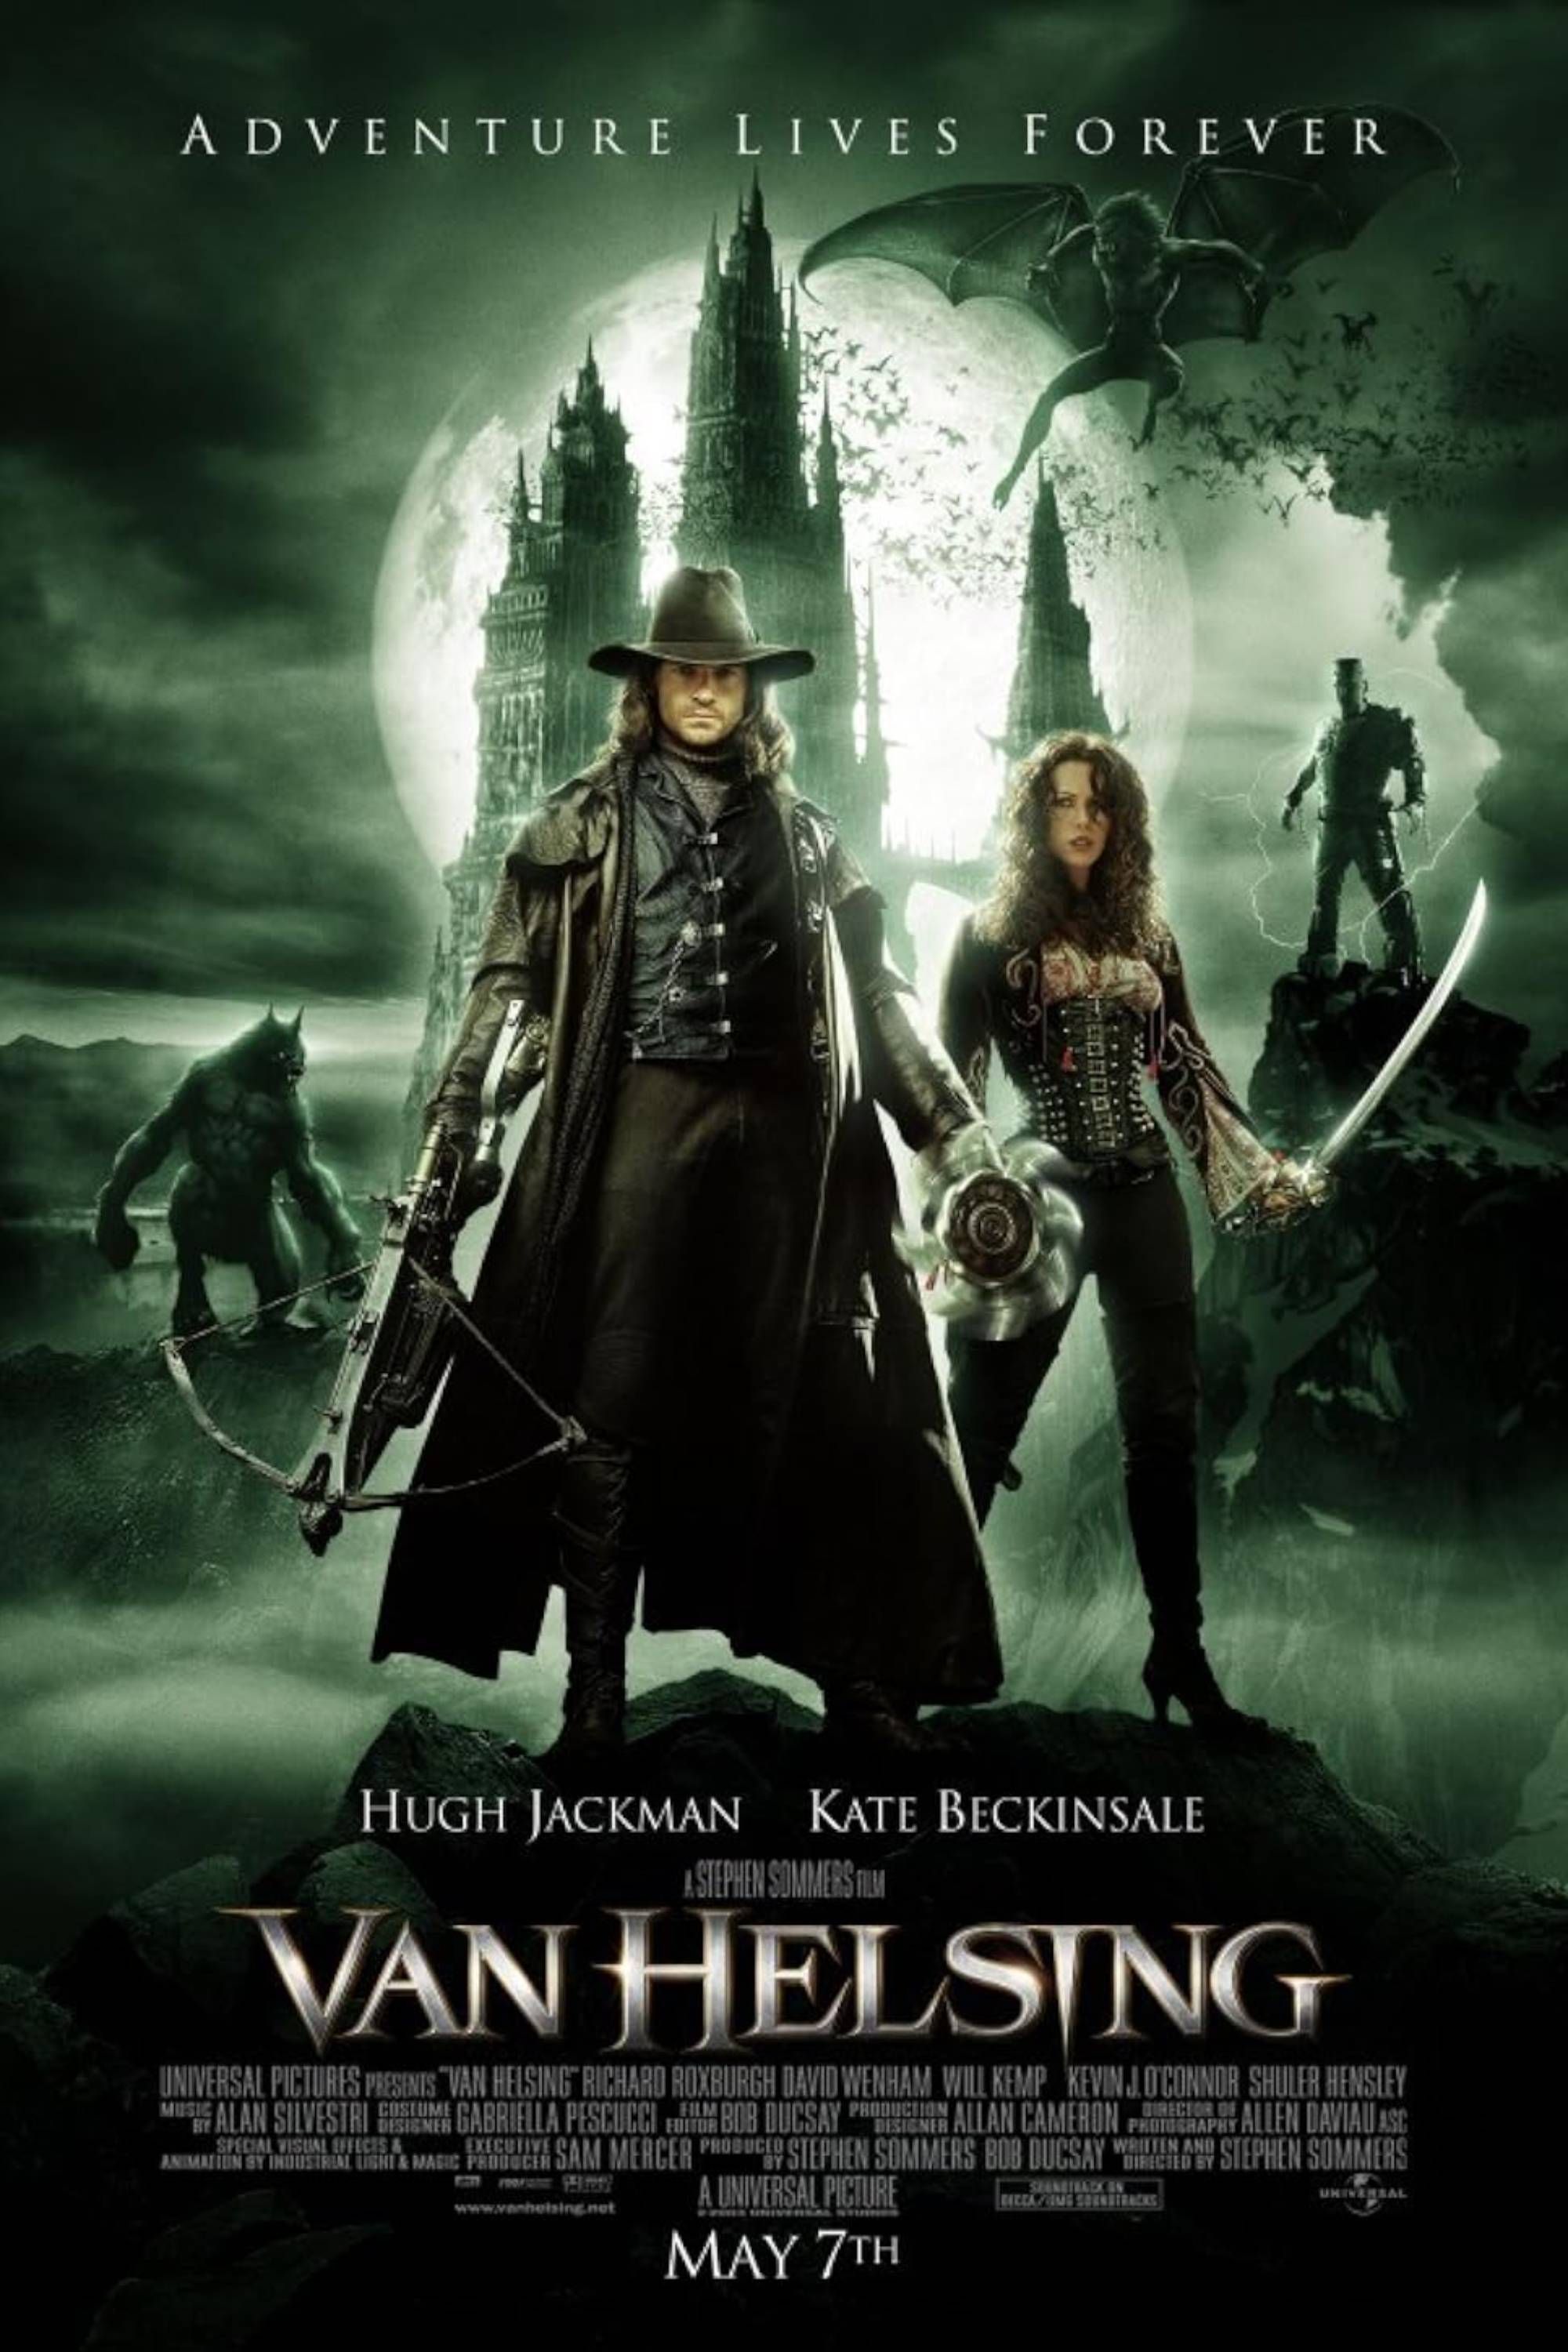 Van Helsing (2004) - Poster - Hugh Jackman & Kate Beckinsale